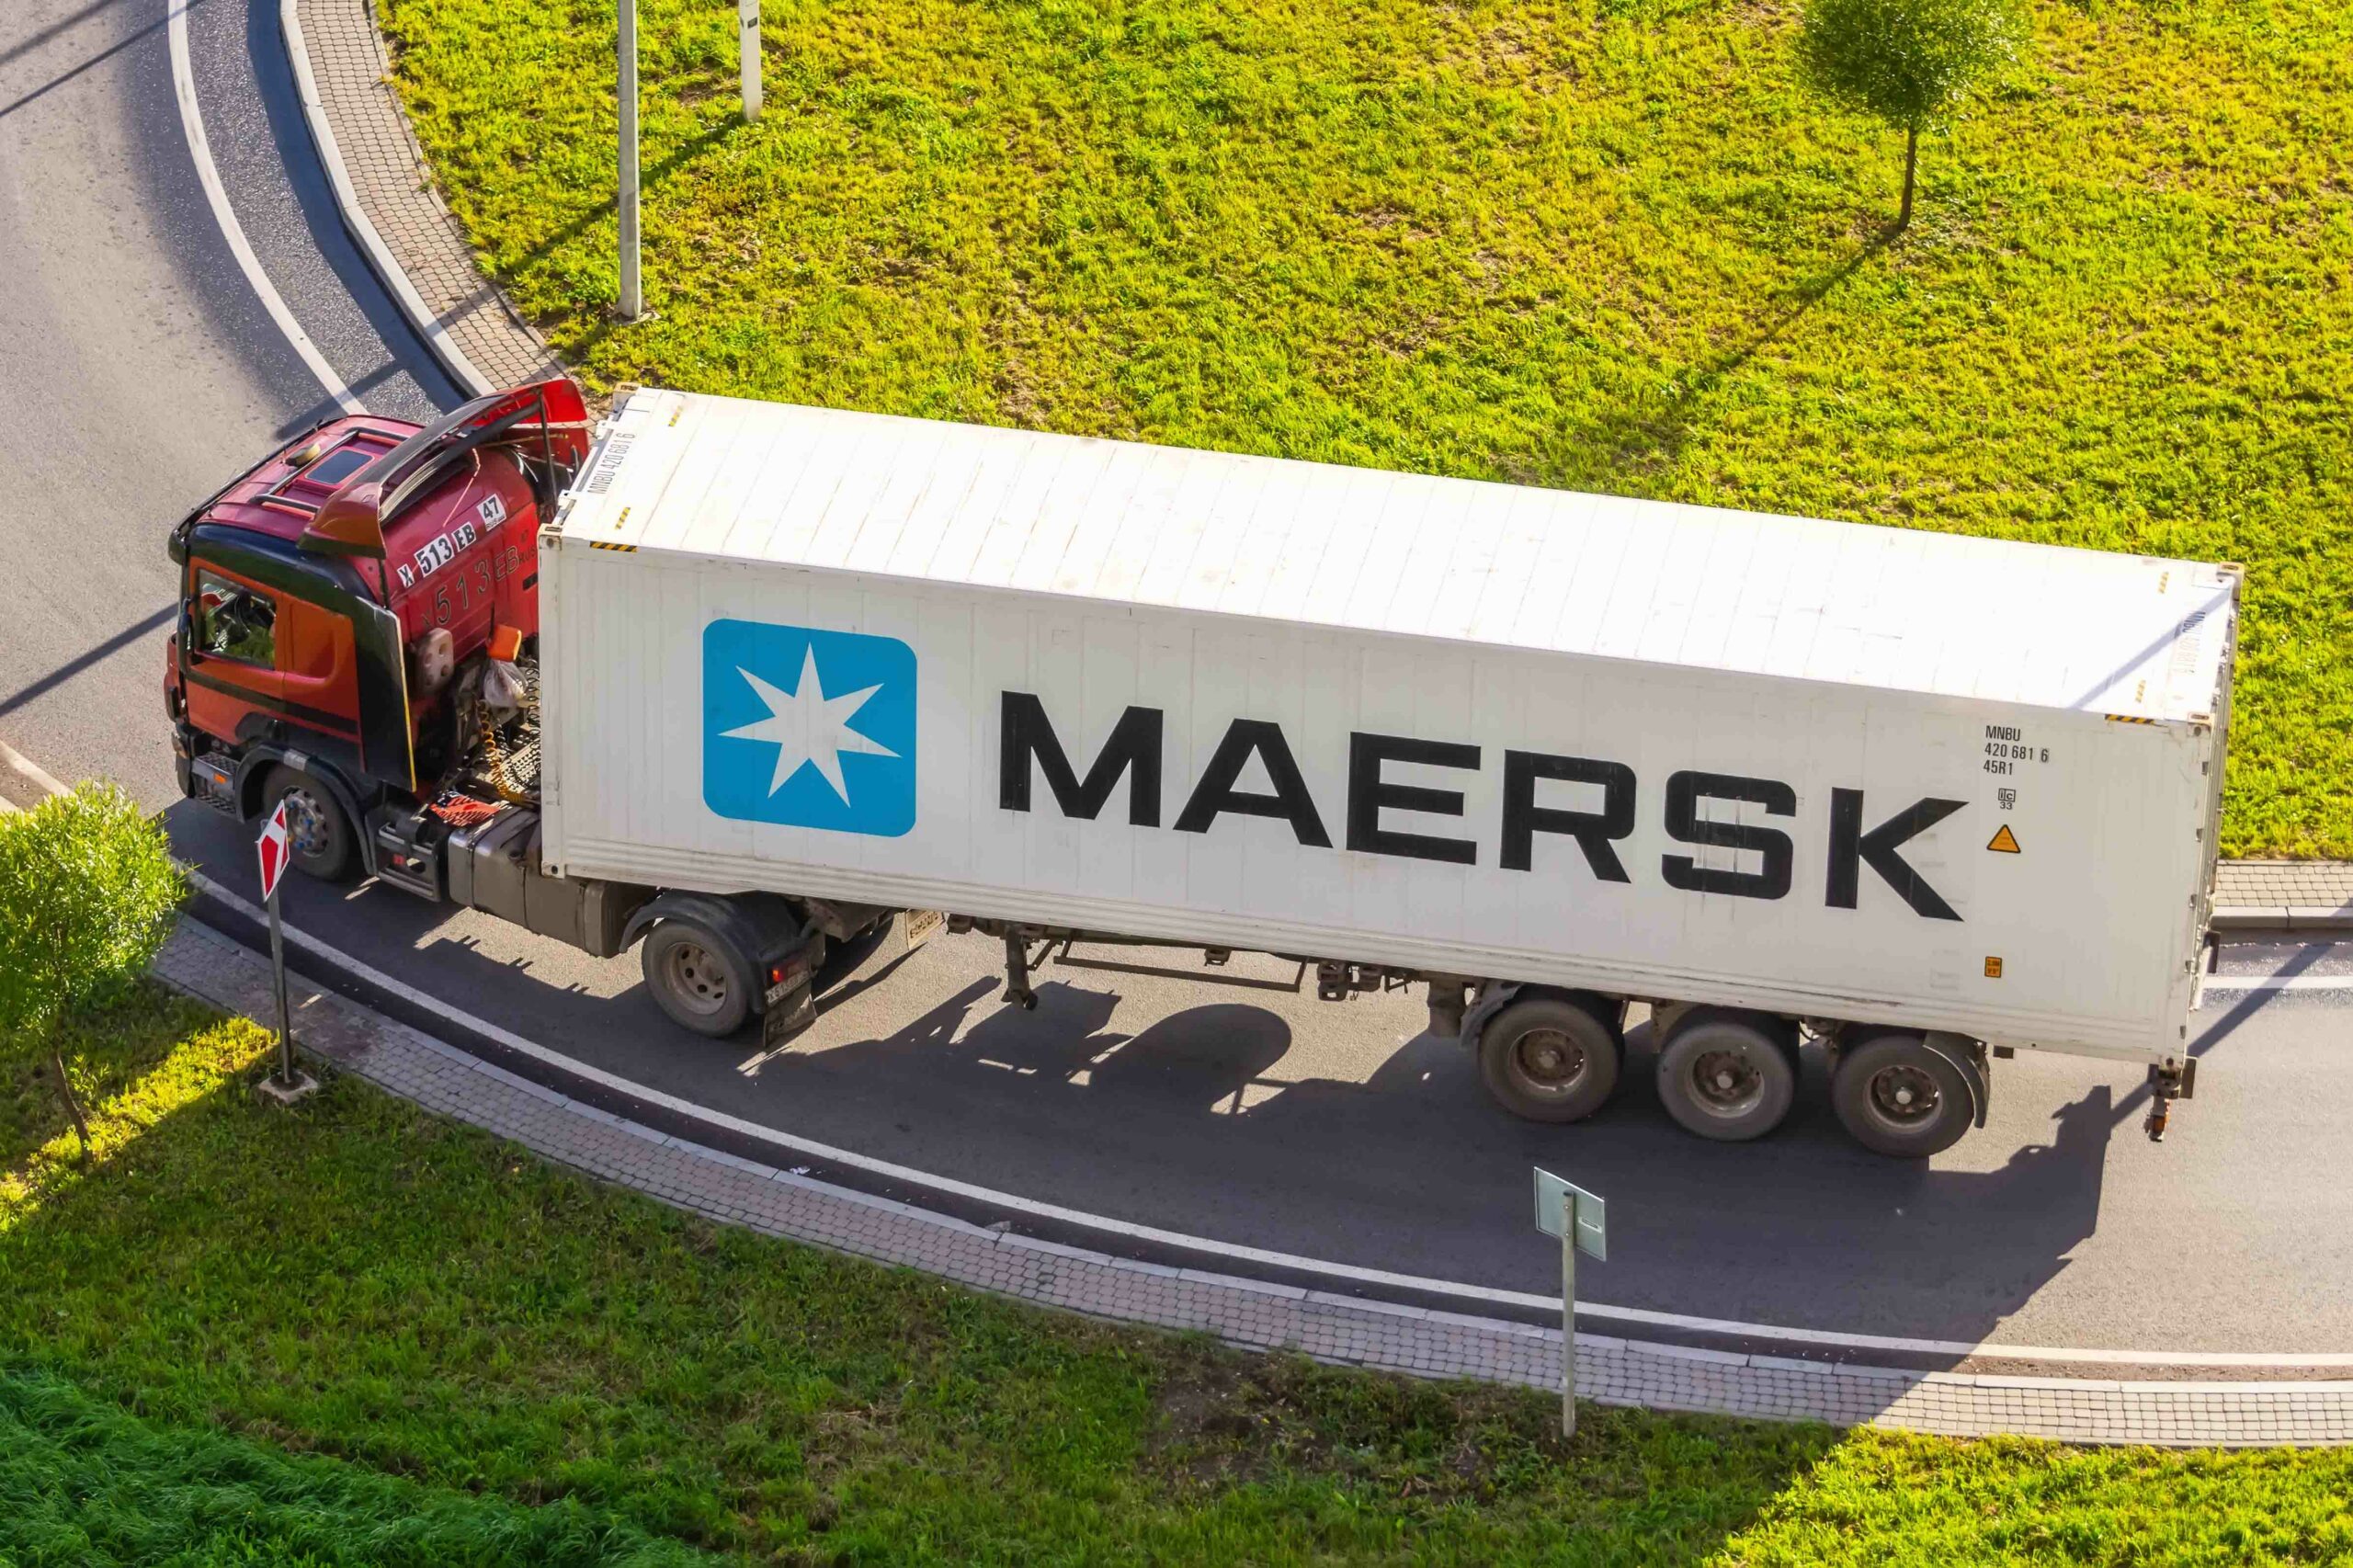 MAersk Green energy 2040 Atlas Logistic NETwork